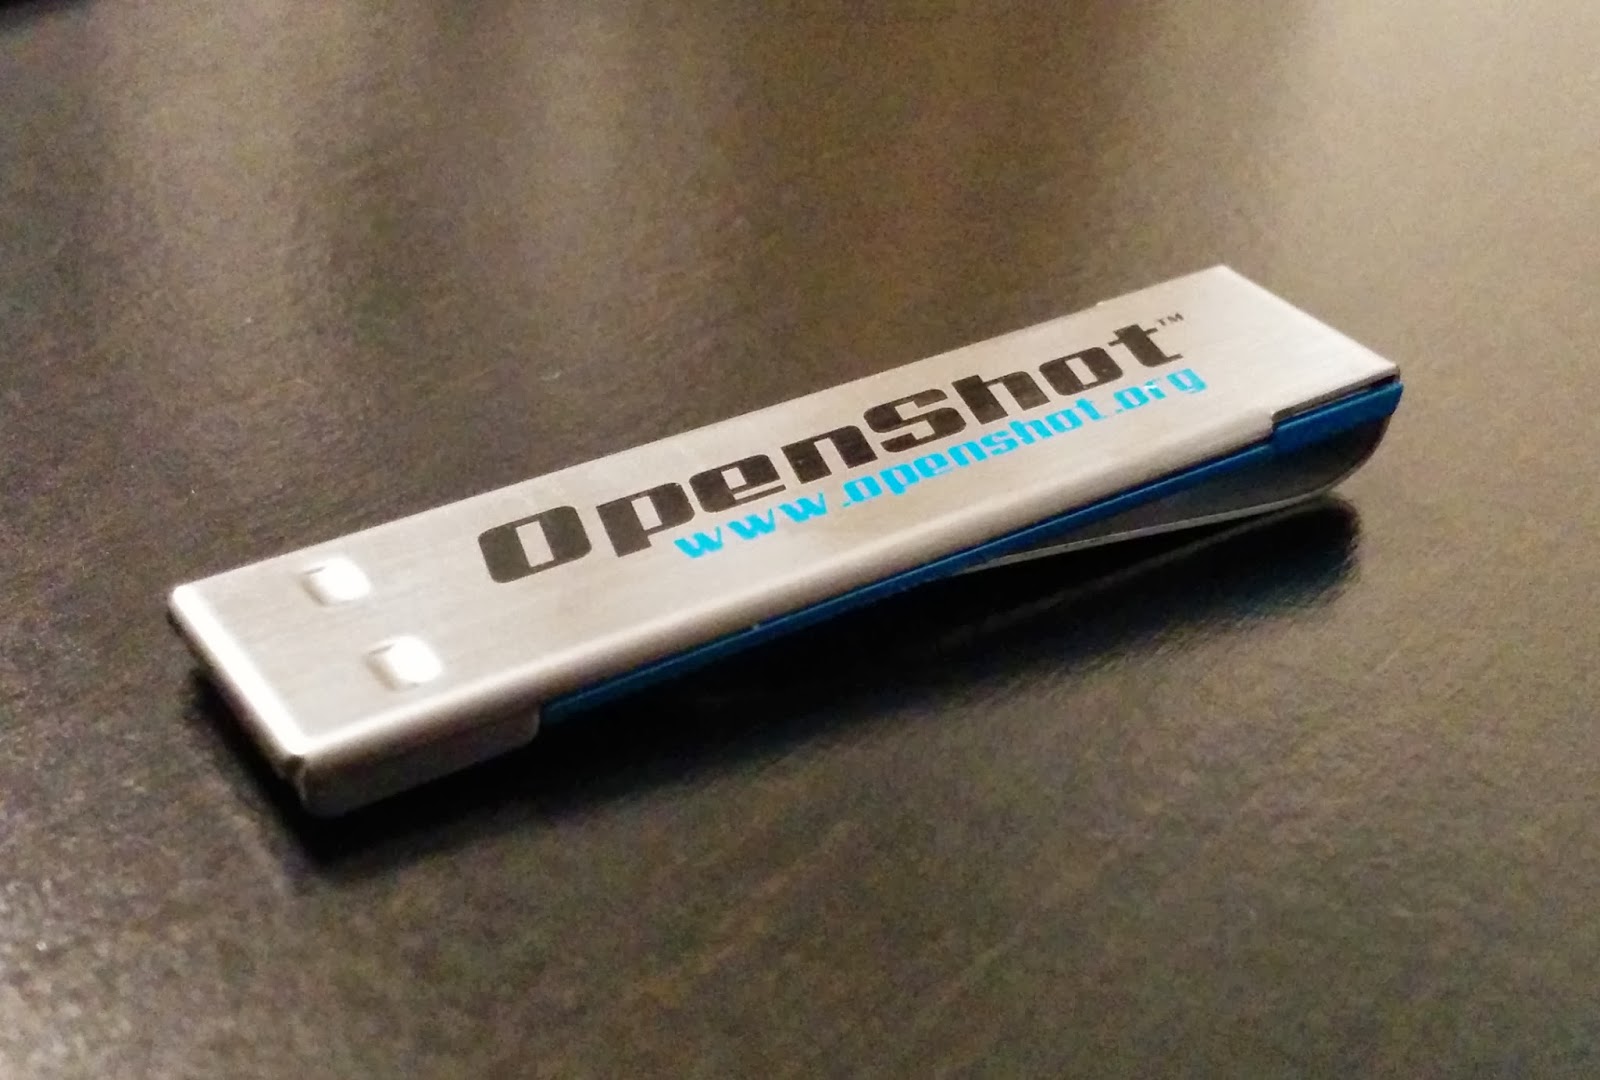 8 GB USB Flash Drive for OpenShot